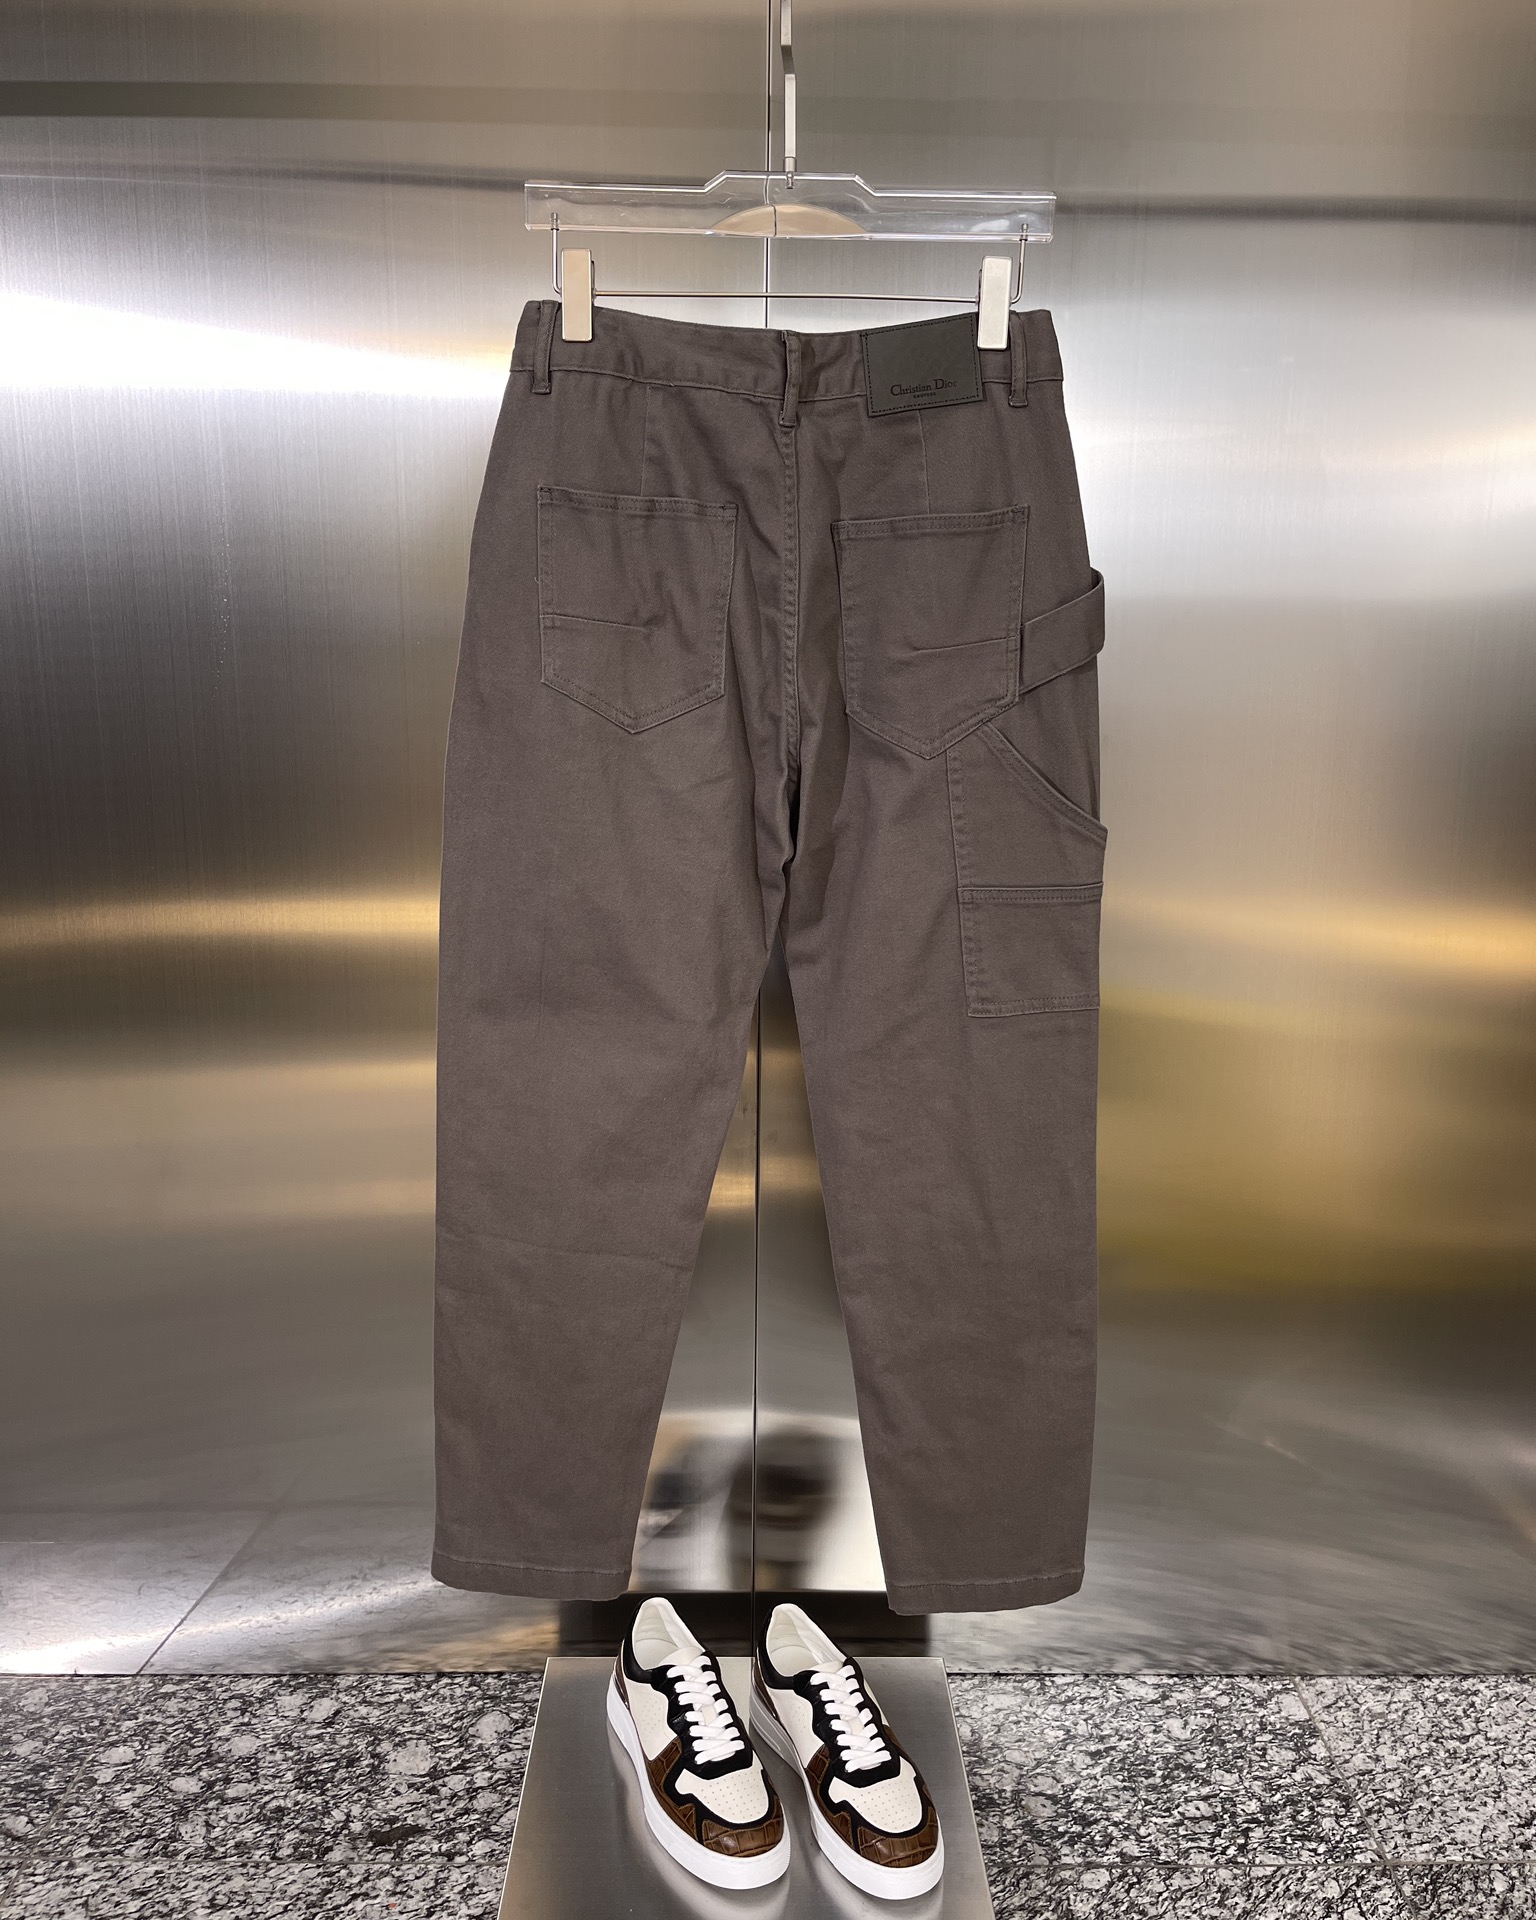 Dior迪奥款式男款工装裤牛仔裤mensjeanssize30-38have35NO37立体裁剪好版型手